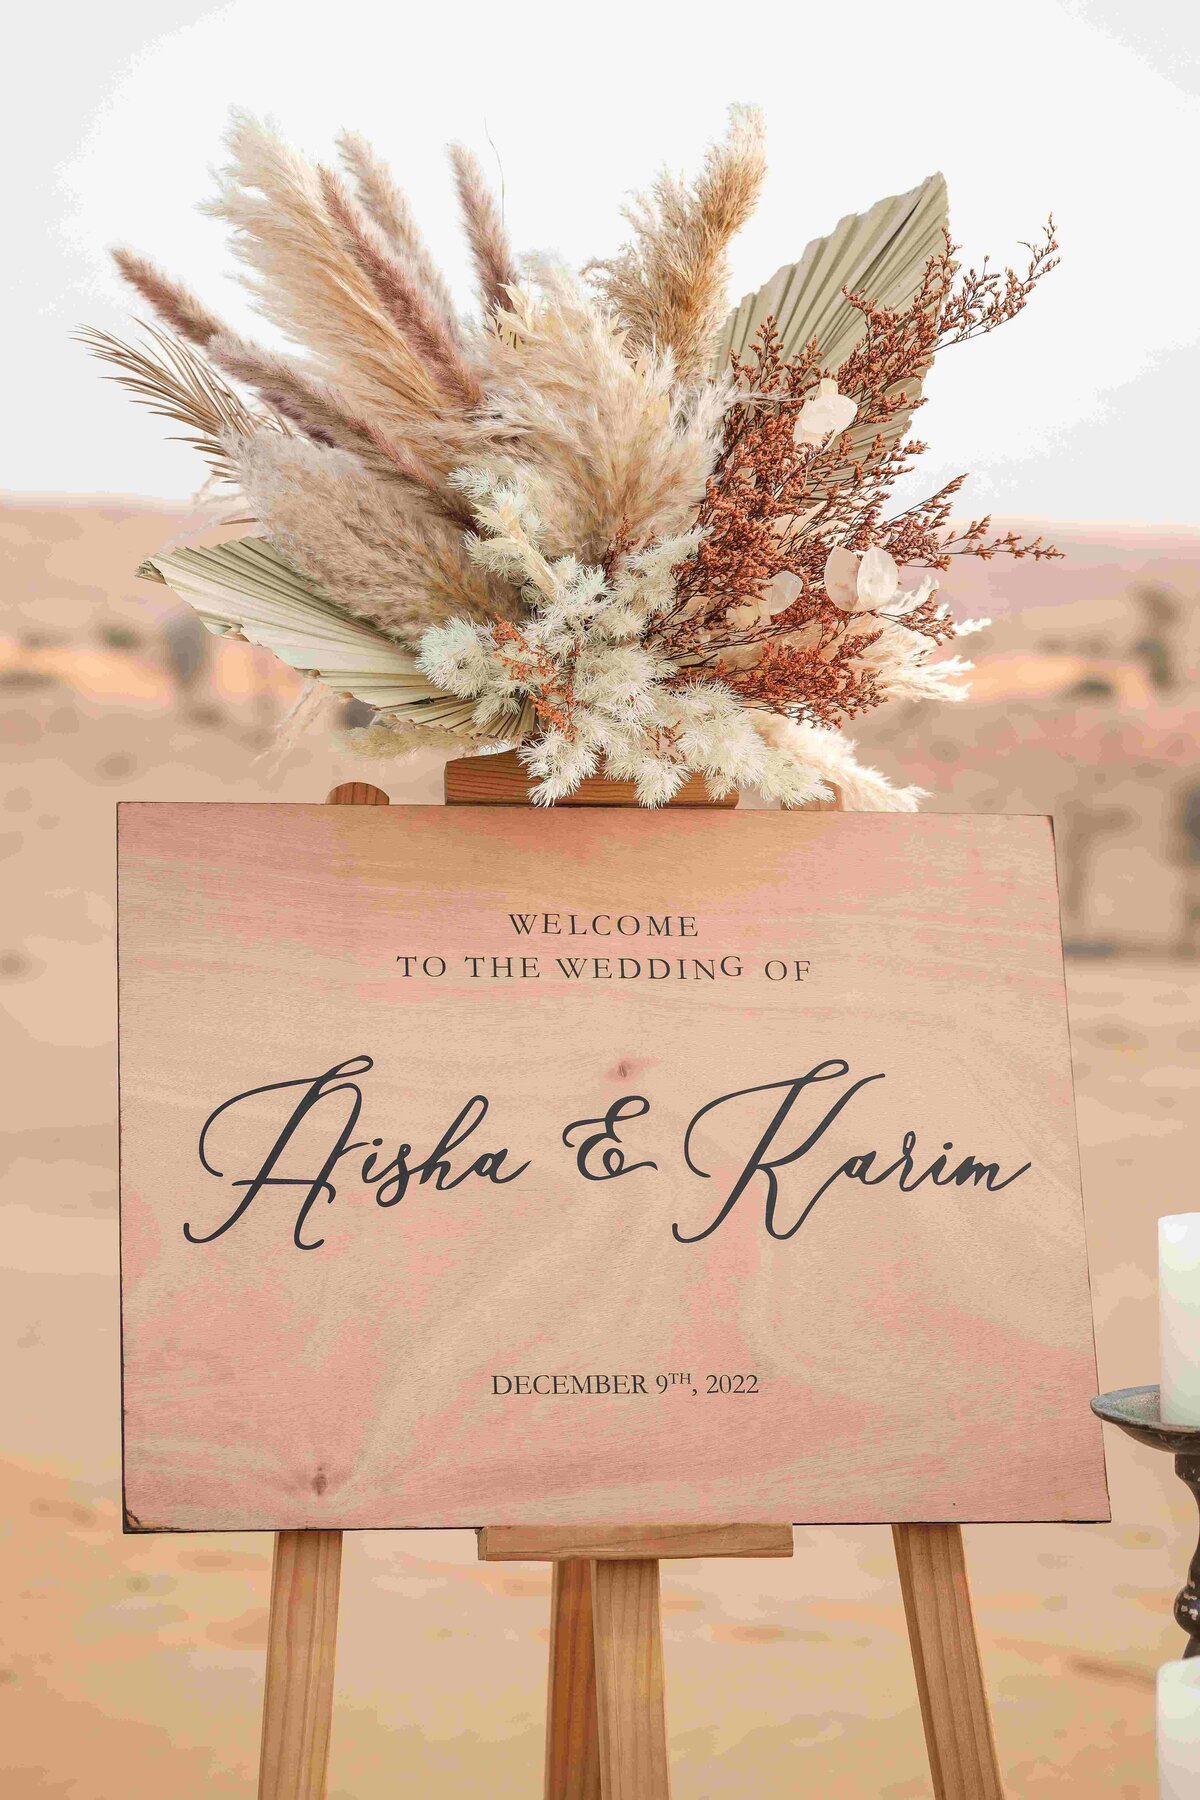 rock-your-event-wedding-styling-planner-designer-dubai-UAE-decadent-desert-wedding-sand-dunes-nara-desert-camp